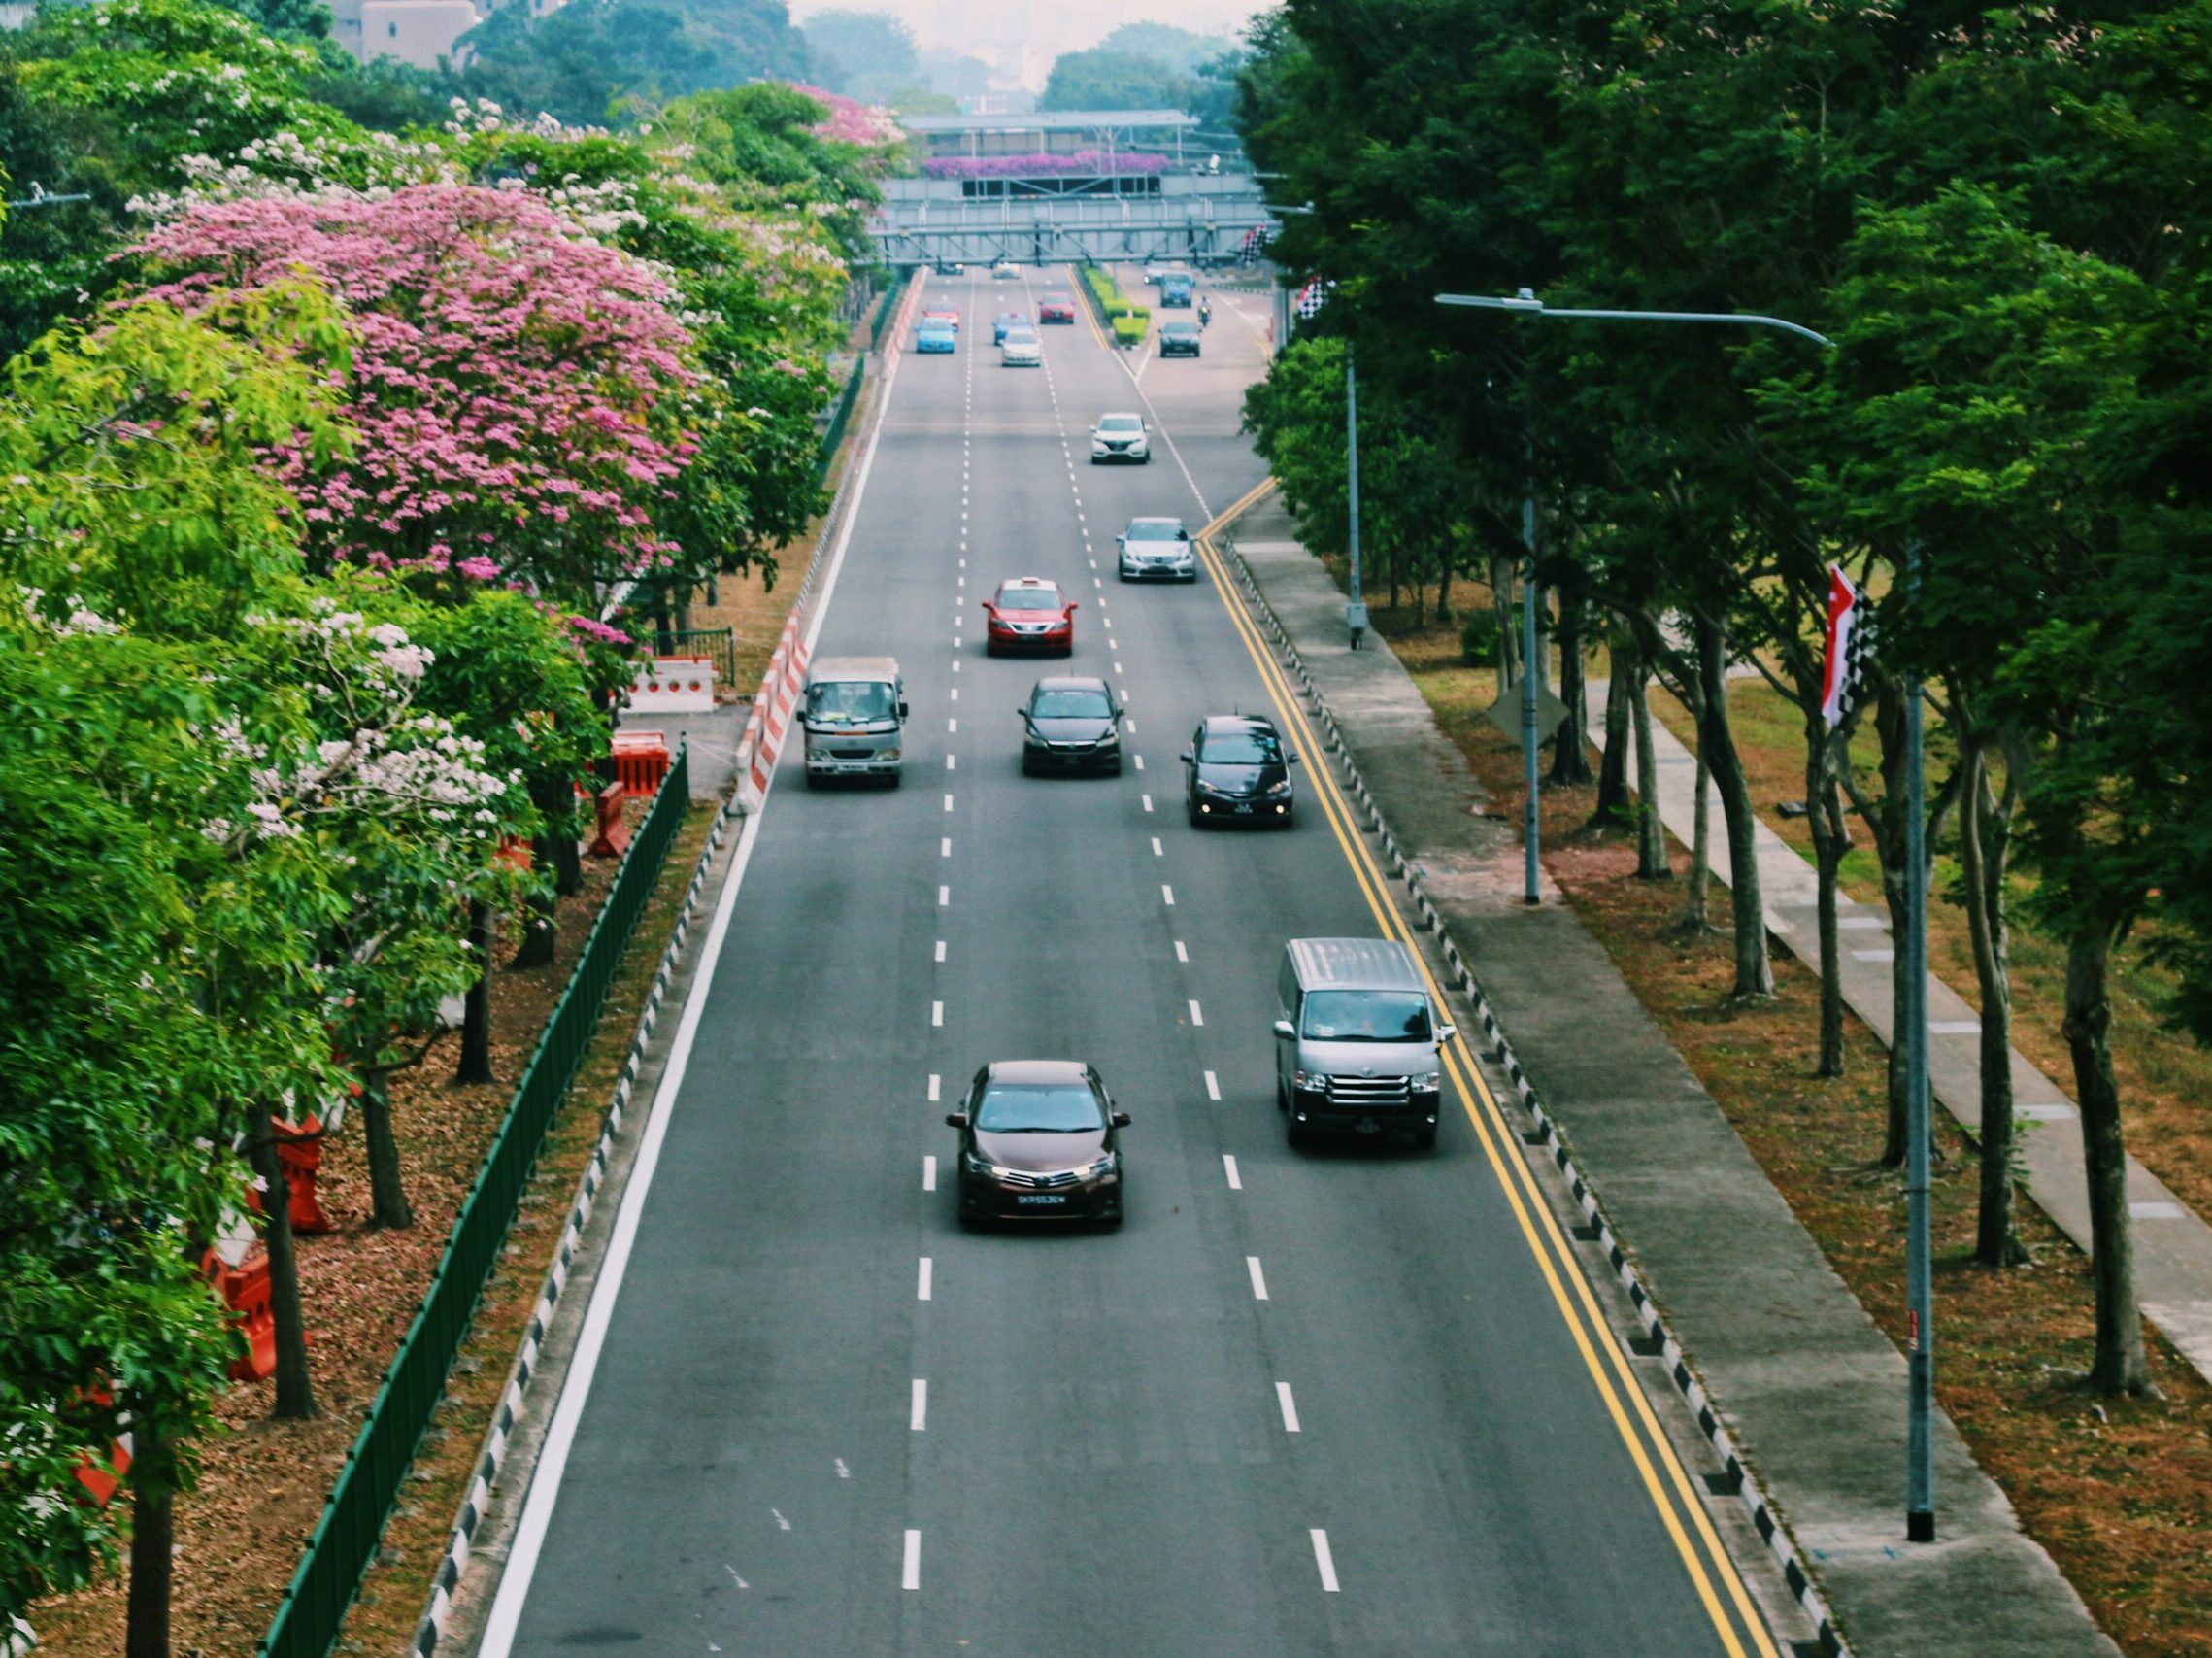 Road in Singapore